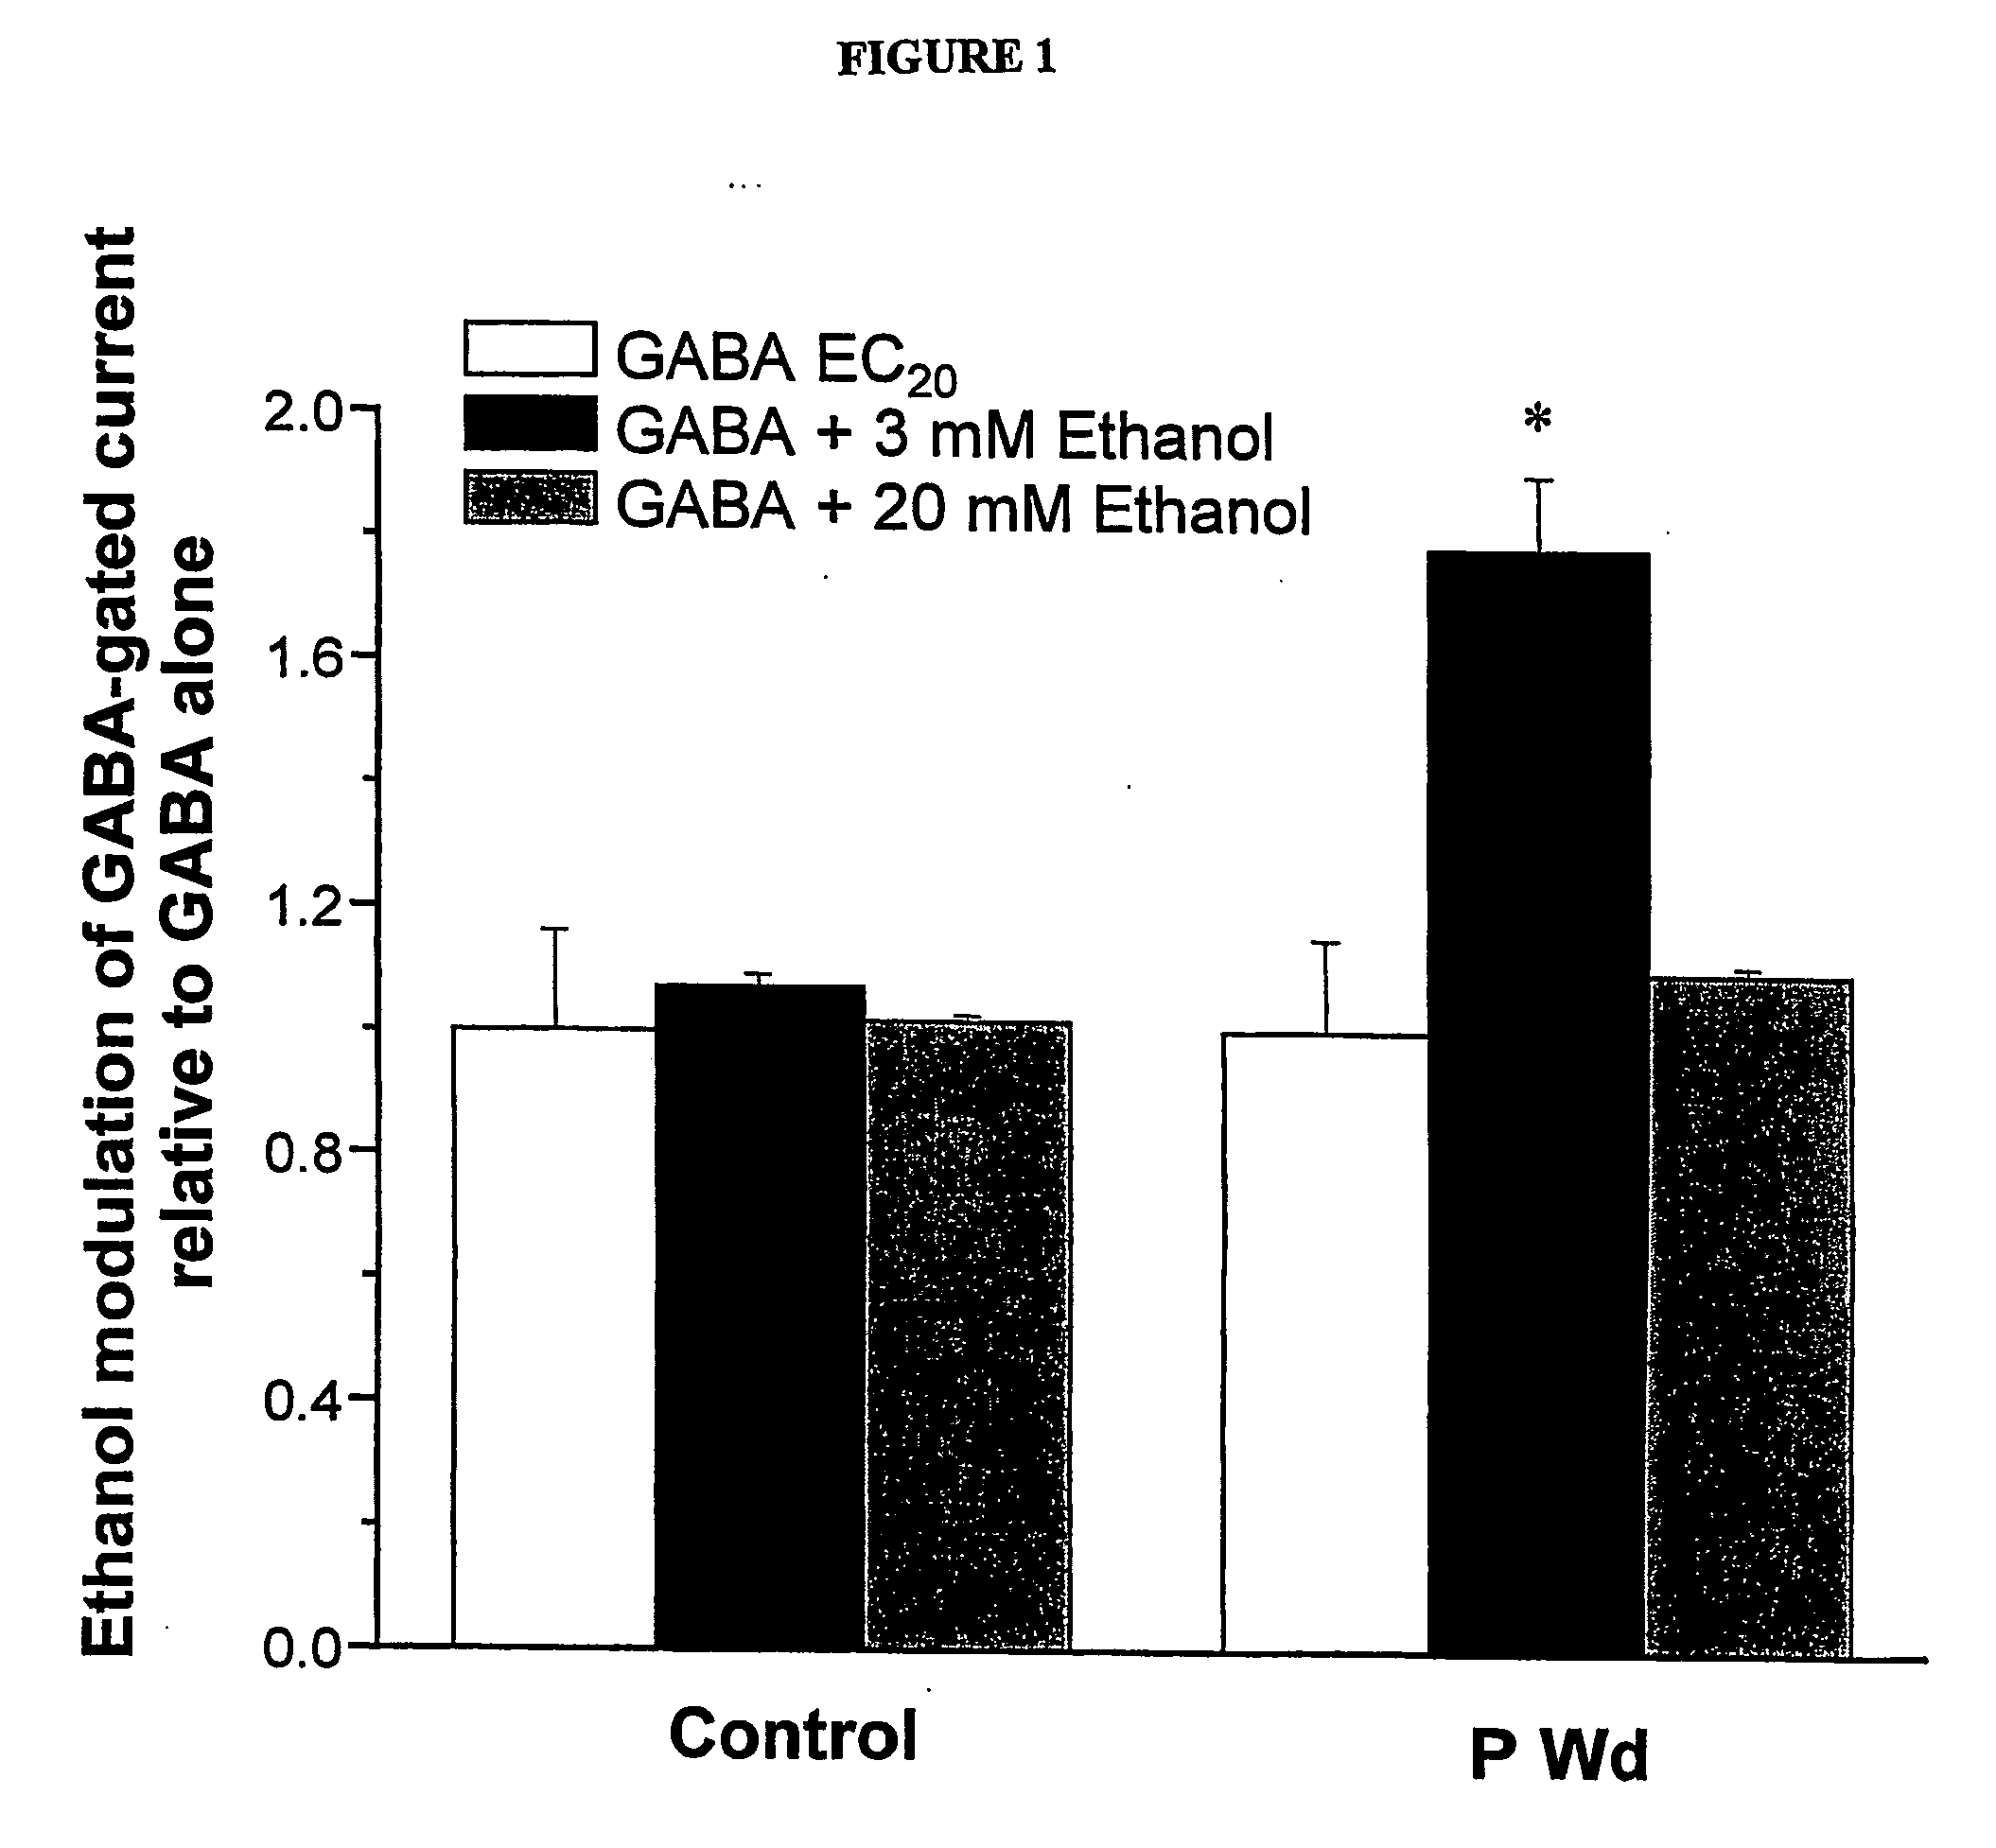 Alpha 4 beta 2 delta gaba-a receptors as a strategy for pms and alcoholism